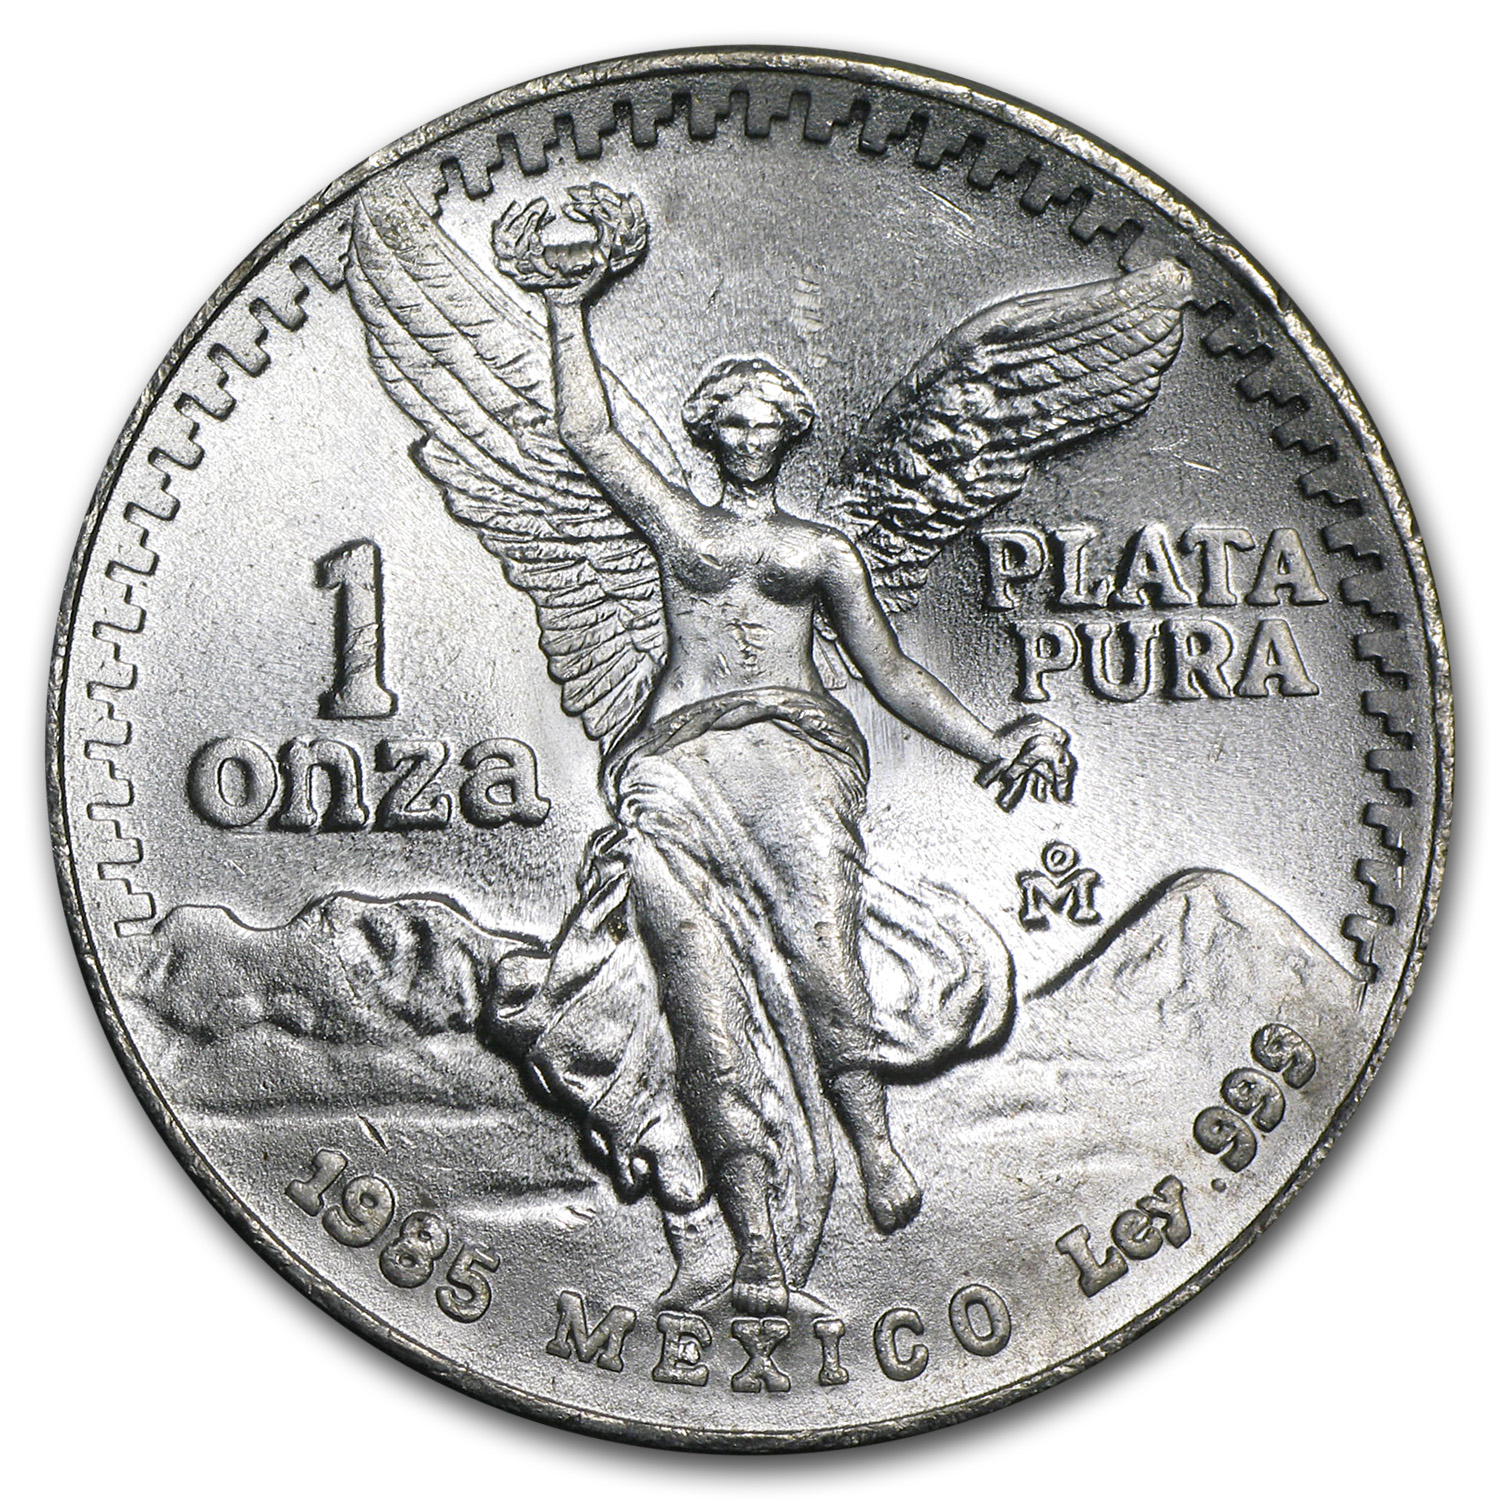 Buy 1985 Mexico 1 oz Silver Libertad BU